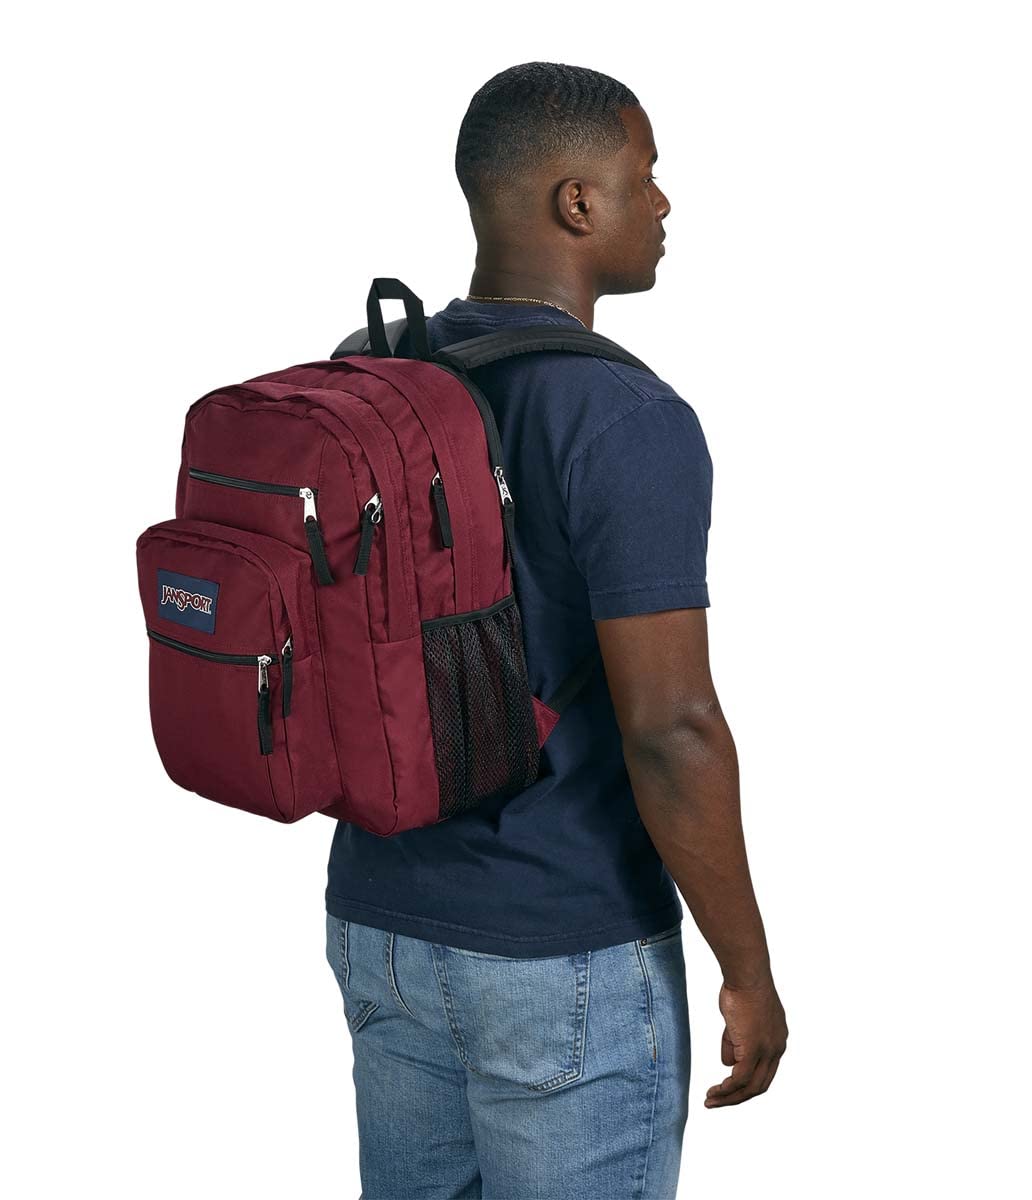 JanSport Big Laptop Backpack for College - Computer Bag with 2 Compartments, Ergonomic Shoulder Straps, 15” Laptop Sleeve, Haul Handle - Book Rucksack, Russet Red